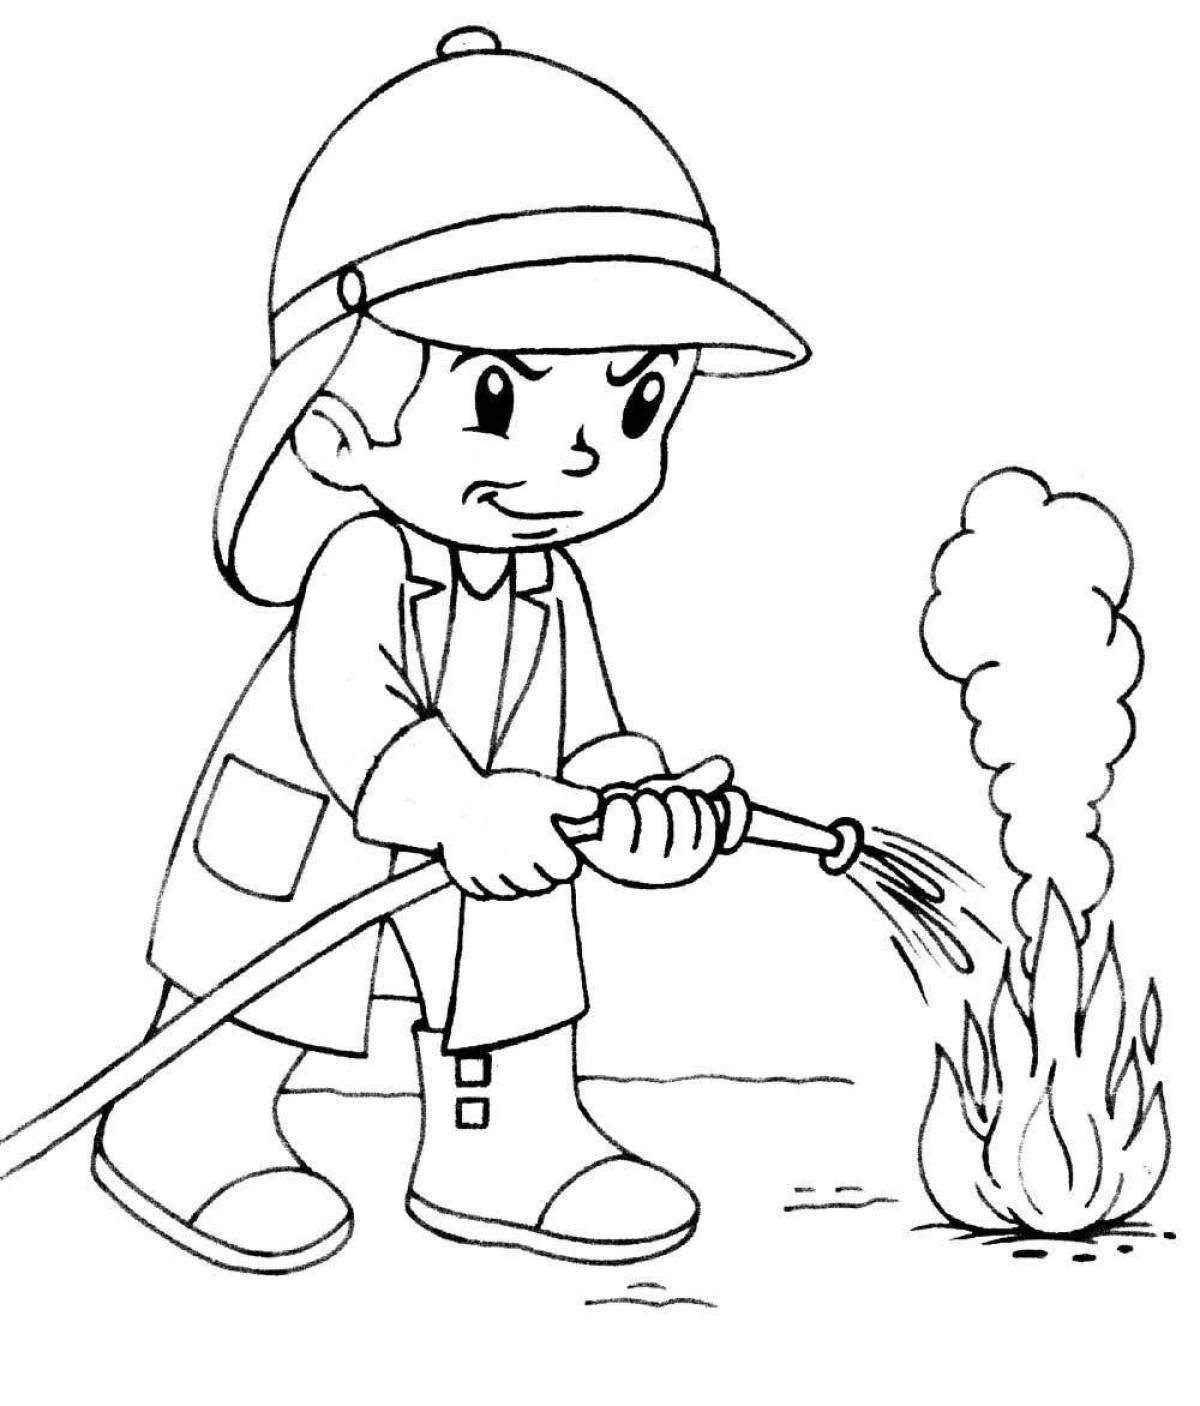 Creative kindergarten fire safety coloring book